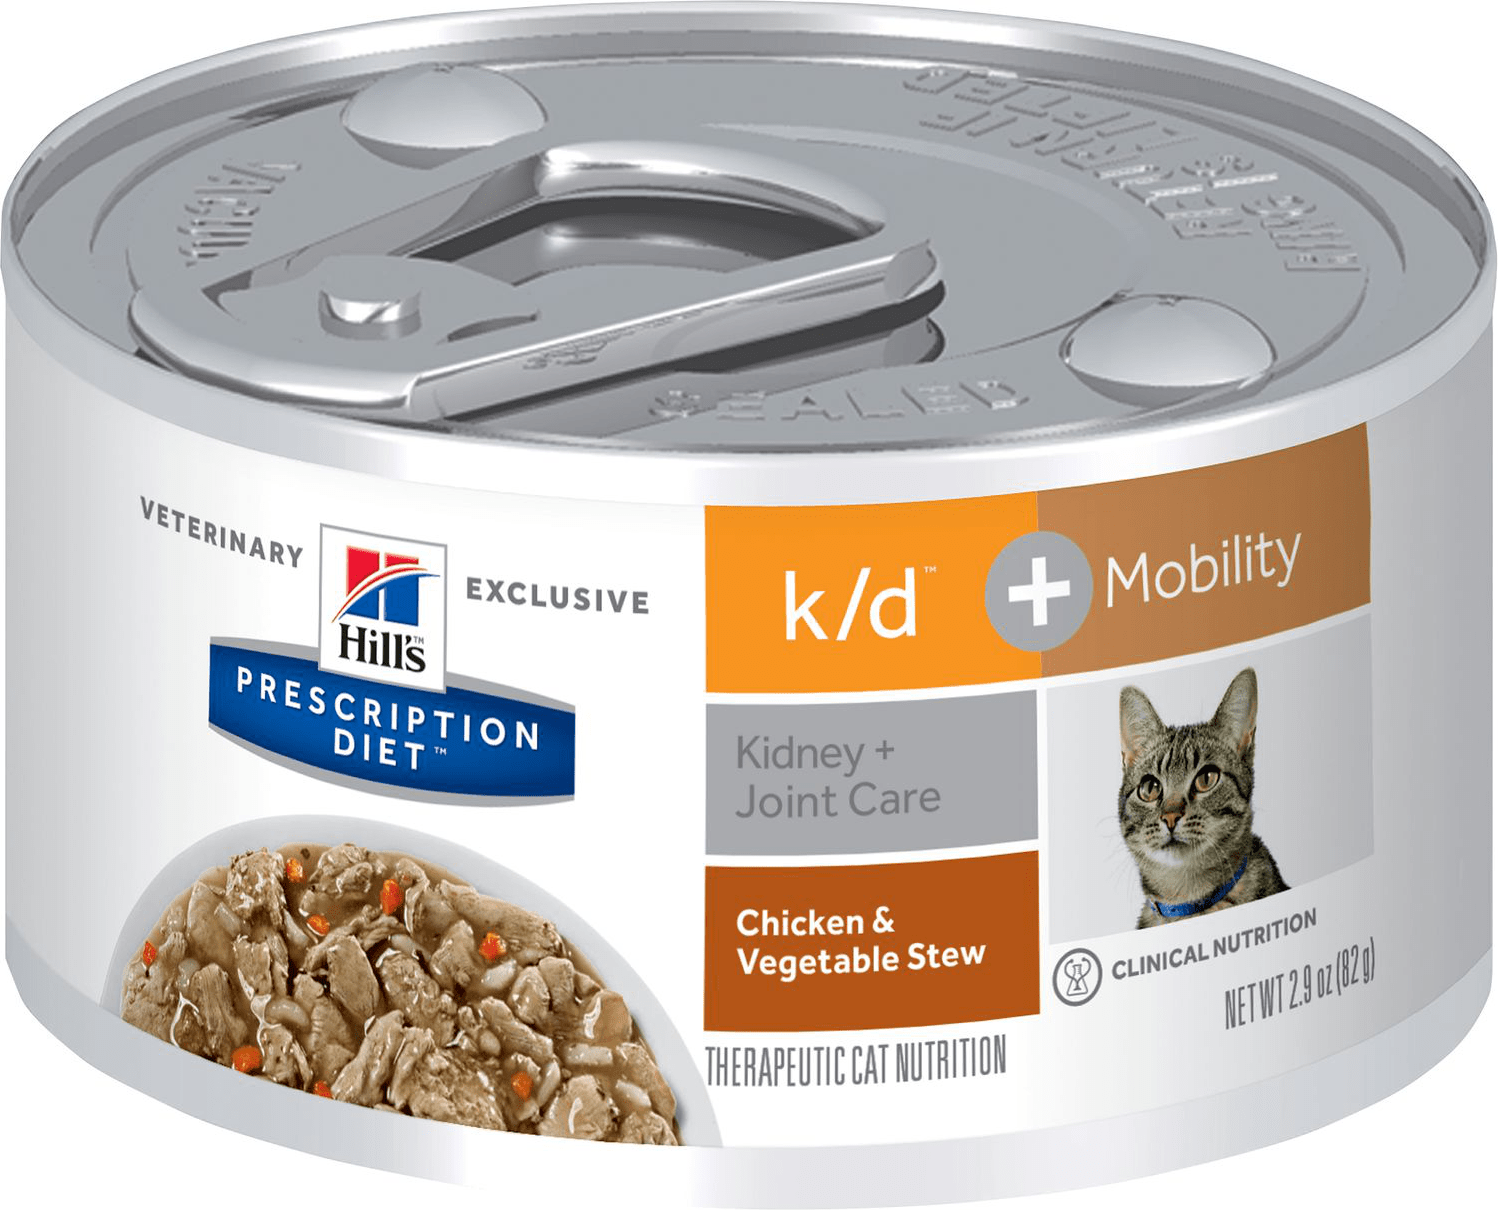 Hill's Prescription Diet K-d + Mobility Chicken & Vegetable Stew